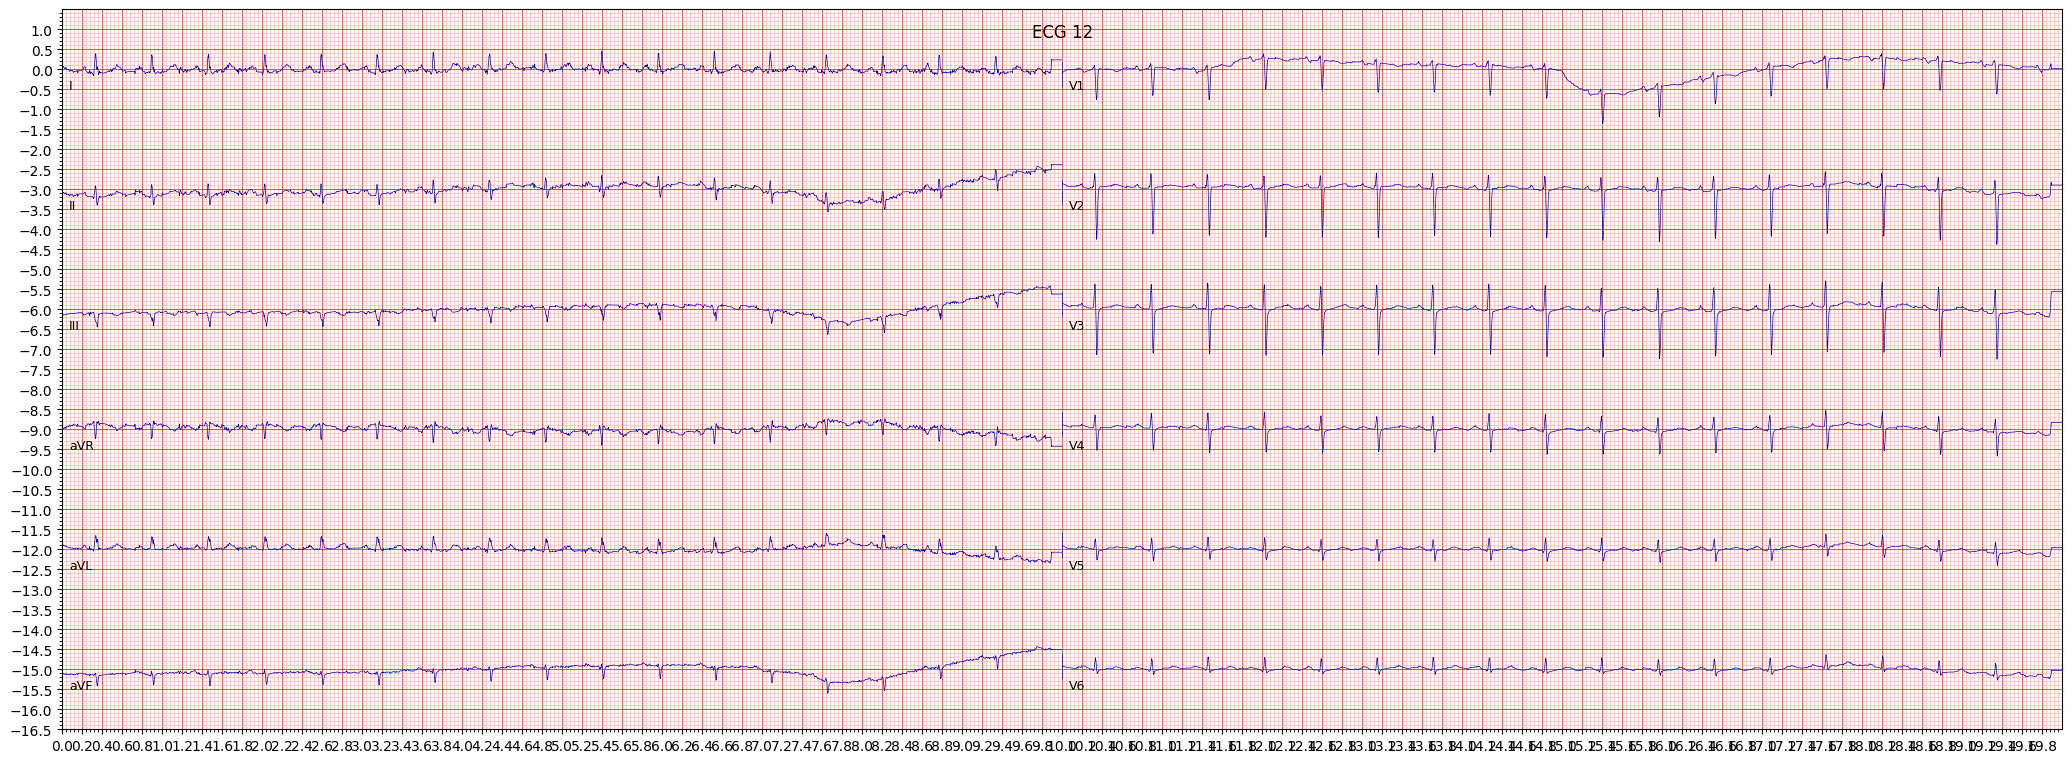 inferolateral myocardial infarction (ILMI) example 2902